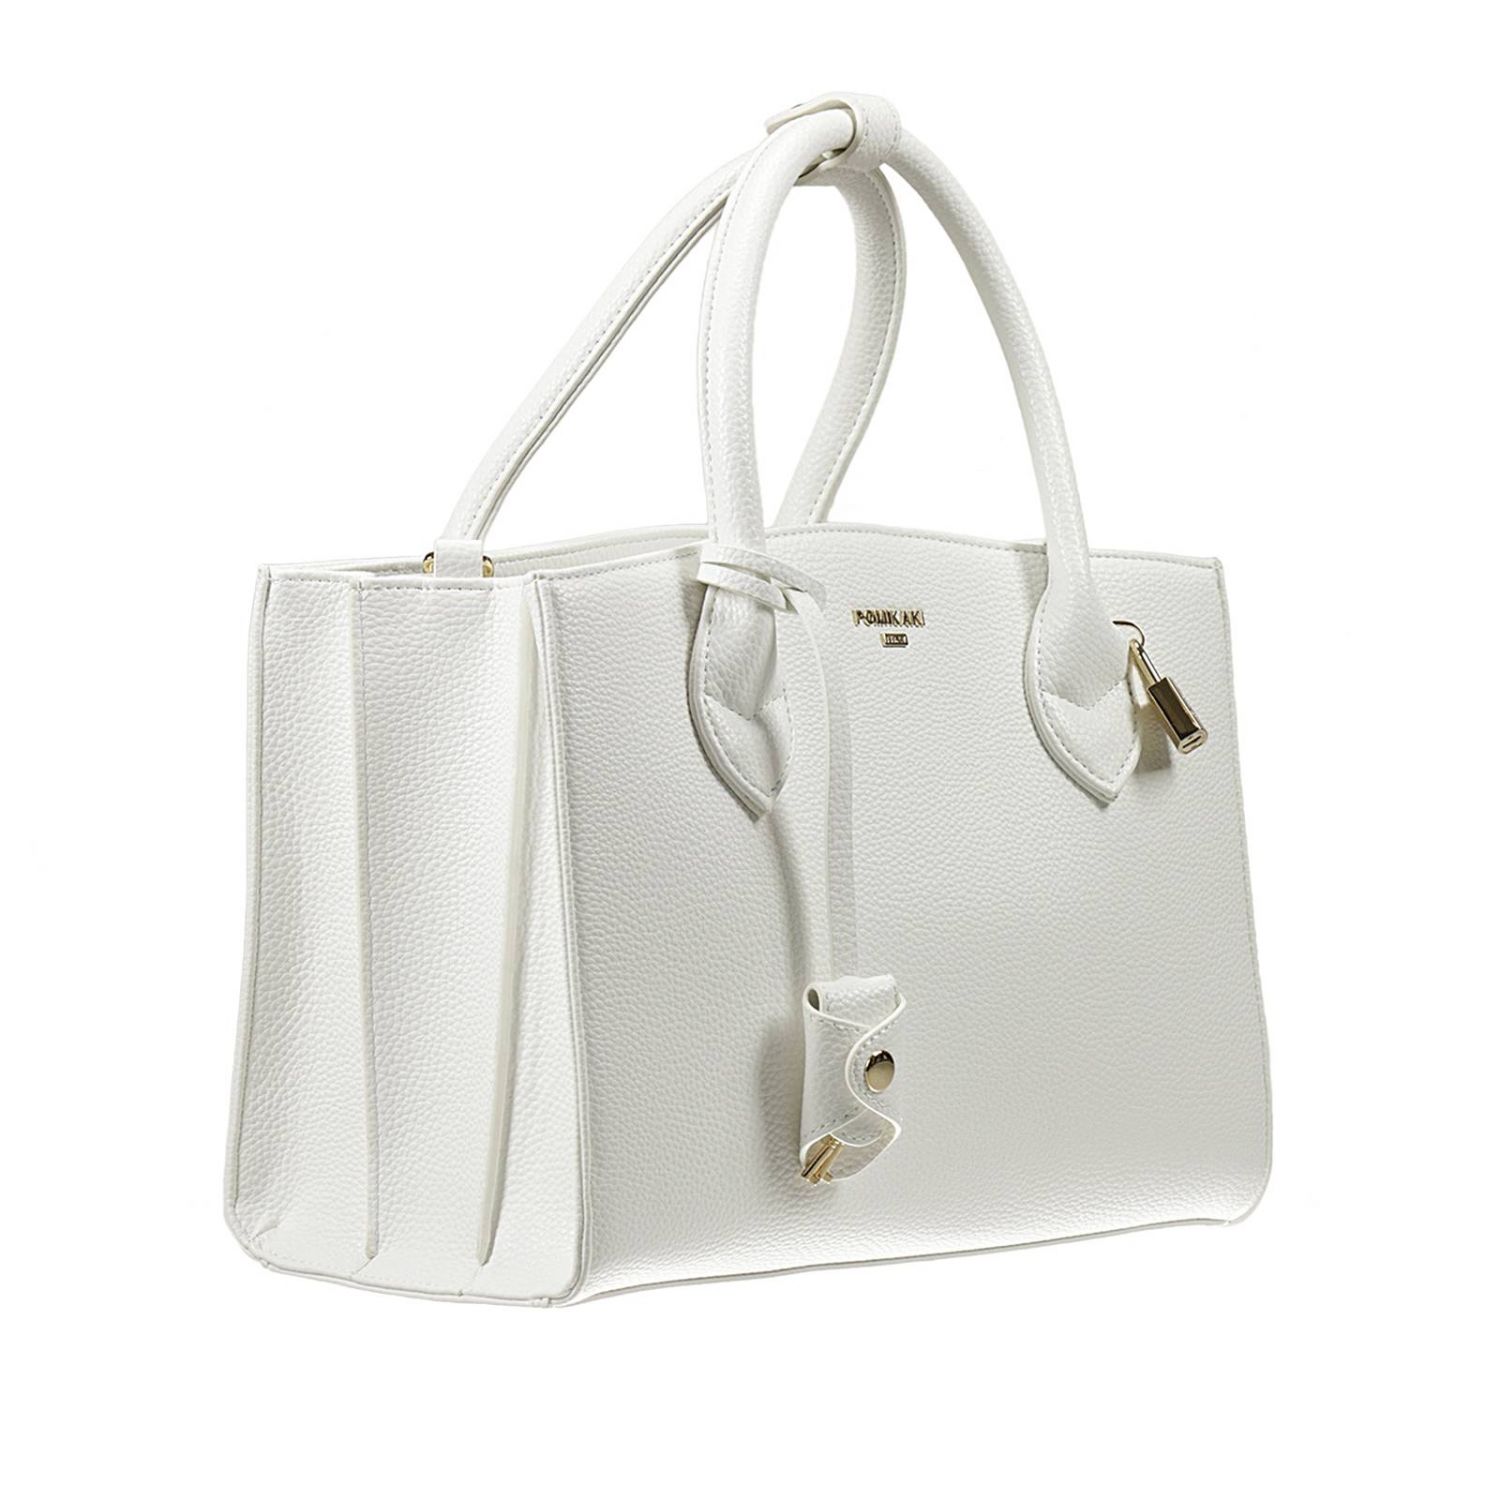 Pomikaki Outlet: | Shoulder Bag Pomikaki Women White | Shoulder Bag ...